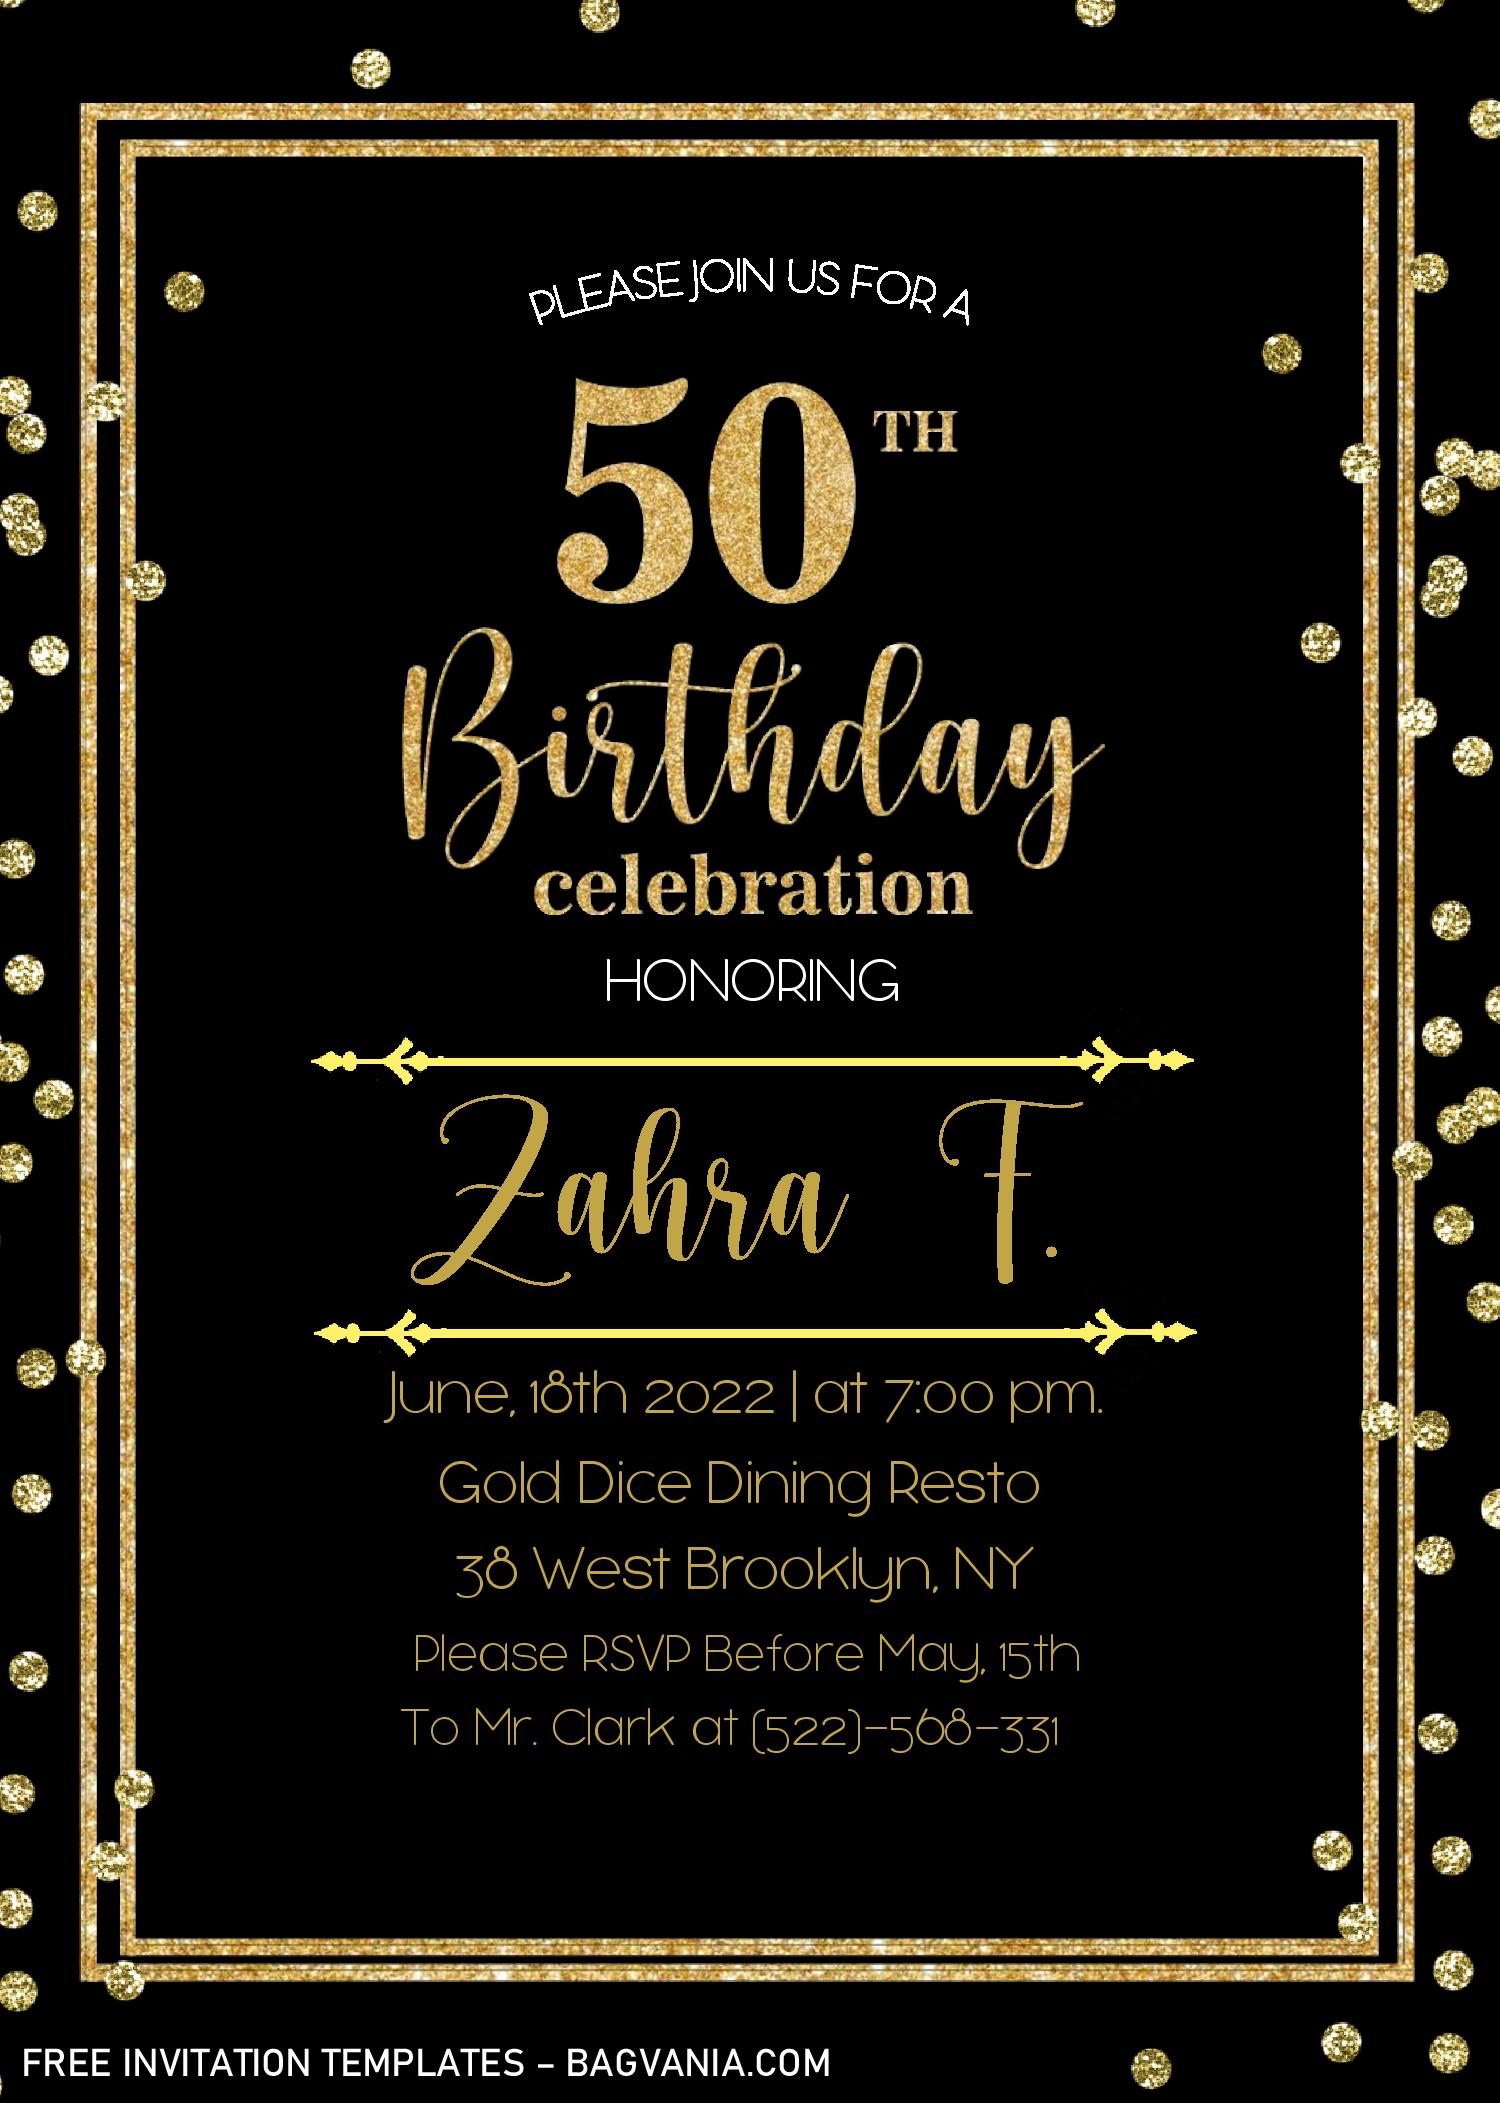 50th-birthday-invitations-templates